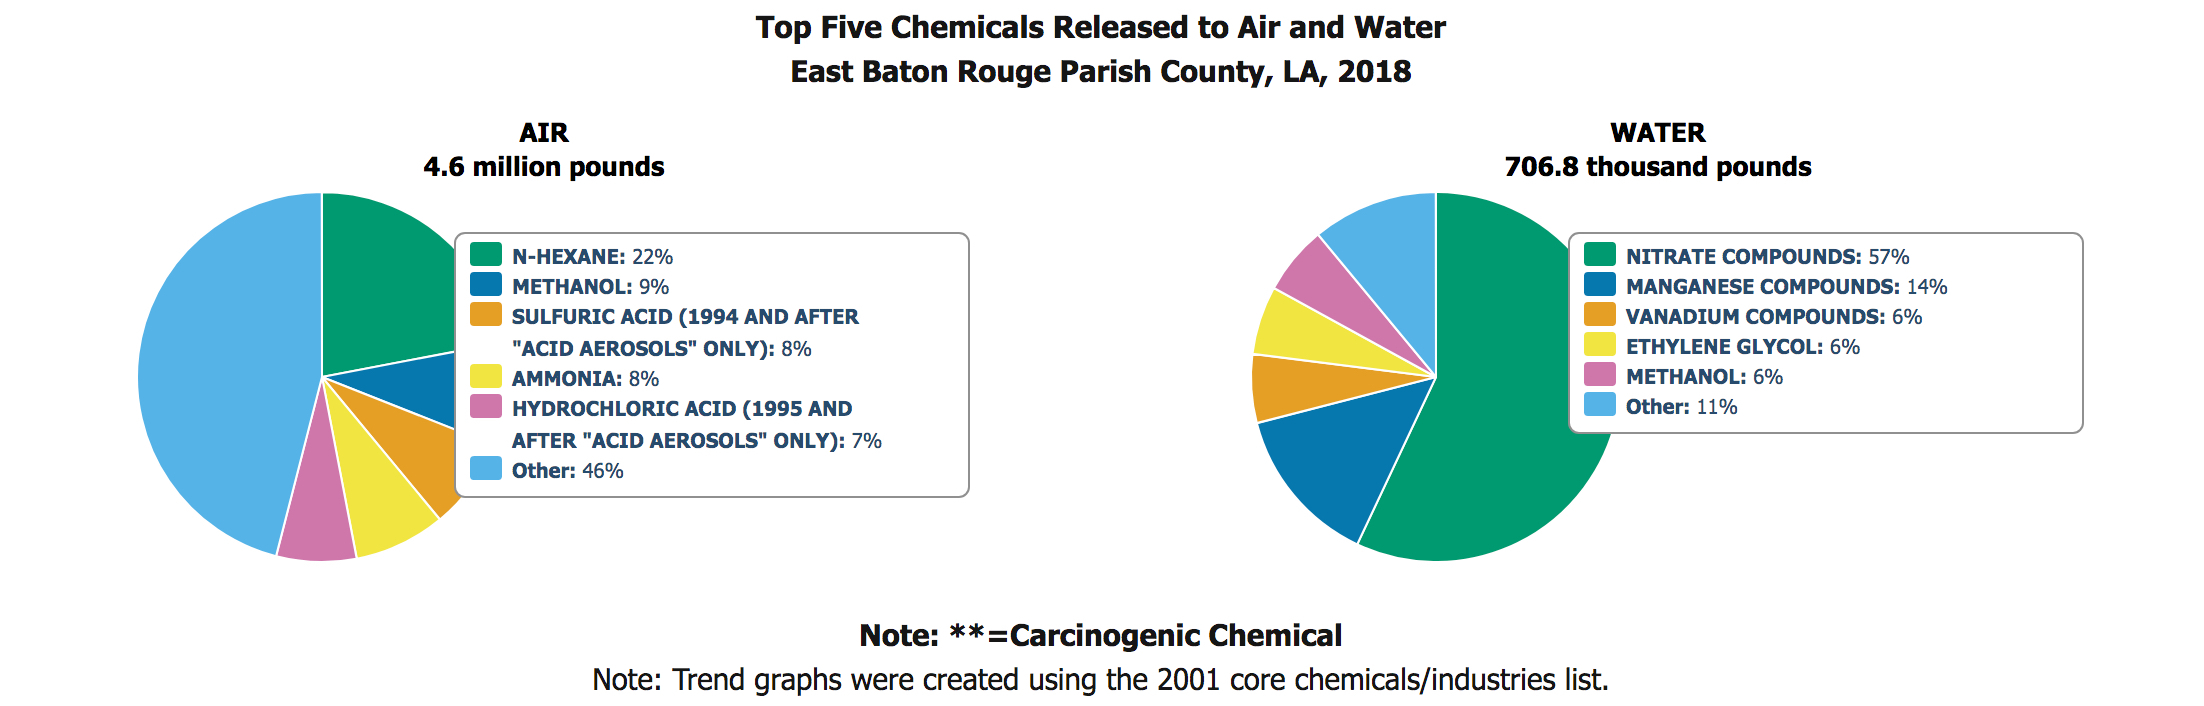 Top 5 Chemicals Released in East Baton Rouge Parish